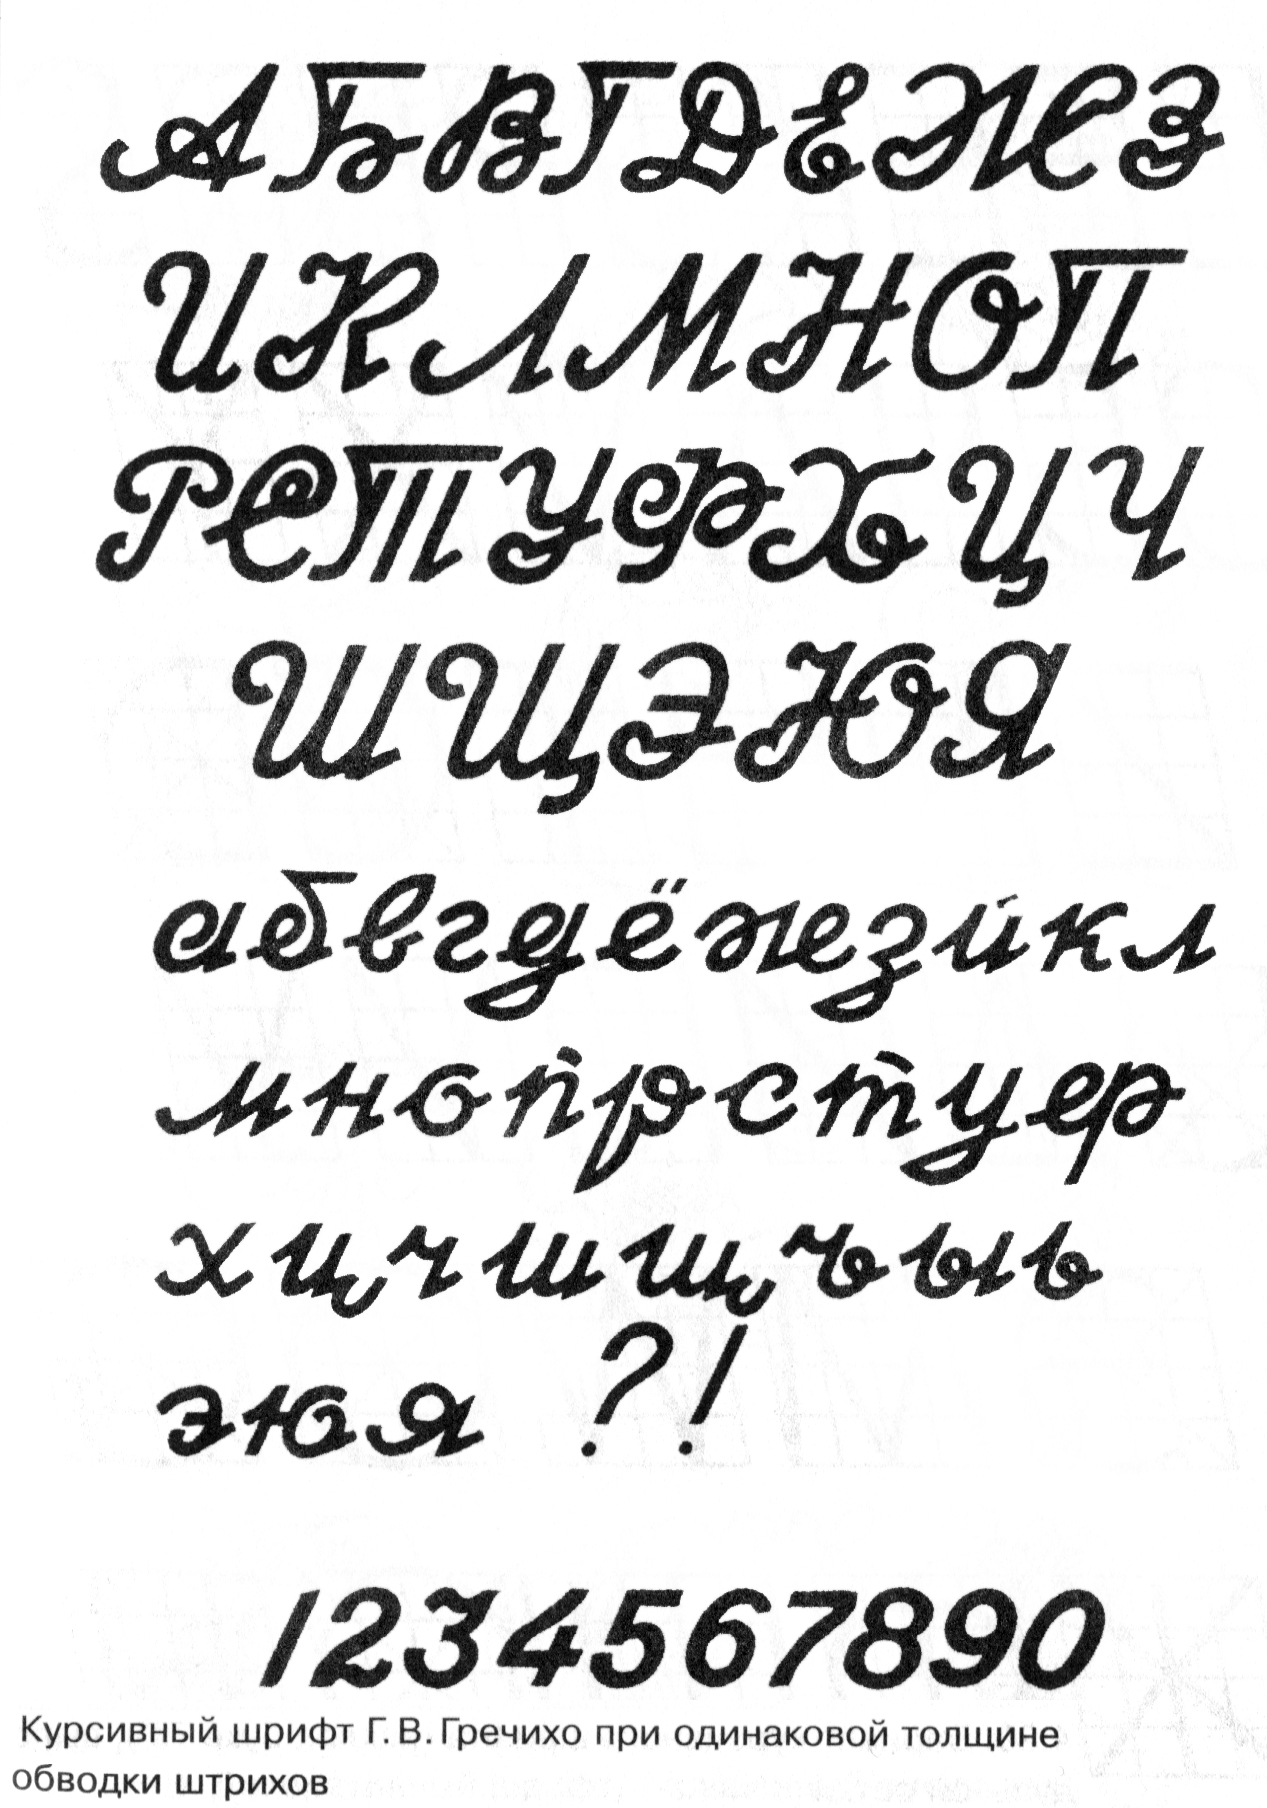 Шрифт для телеграмма красивый на русском фото 93